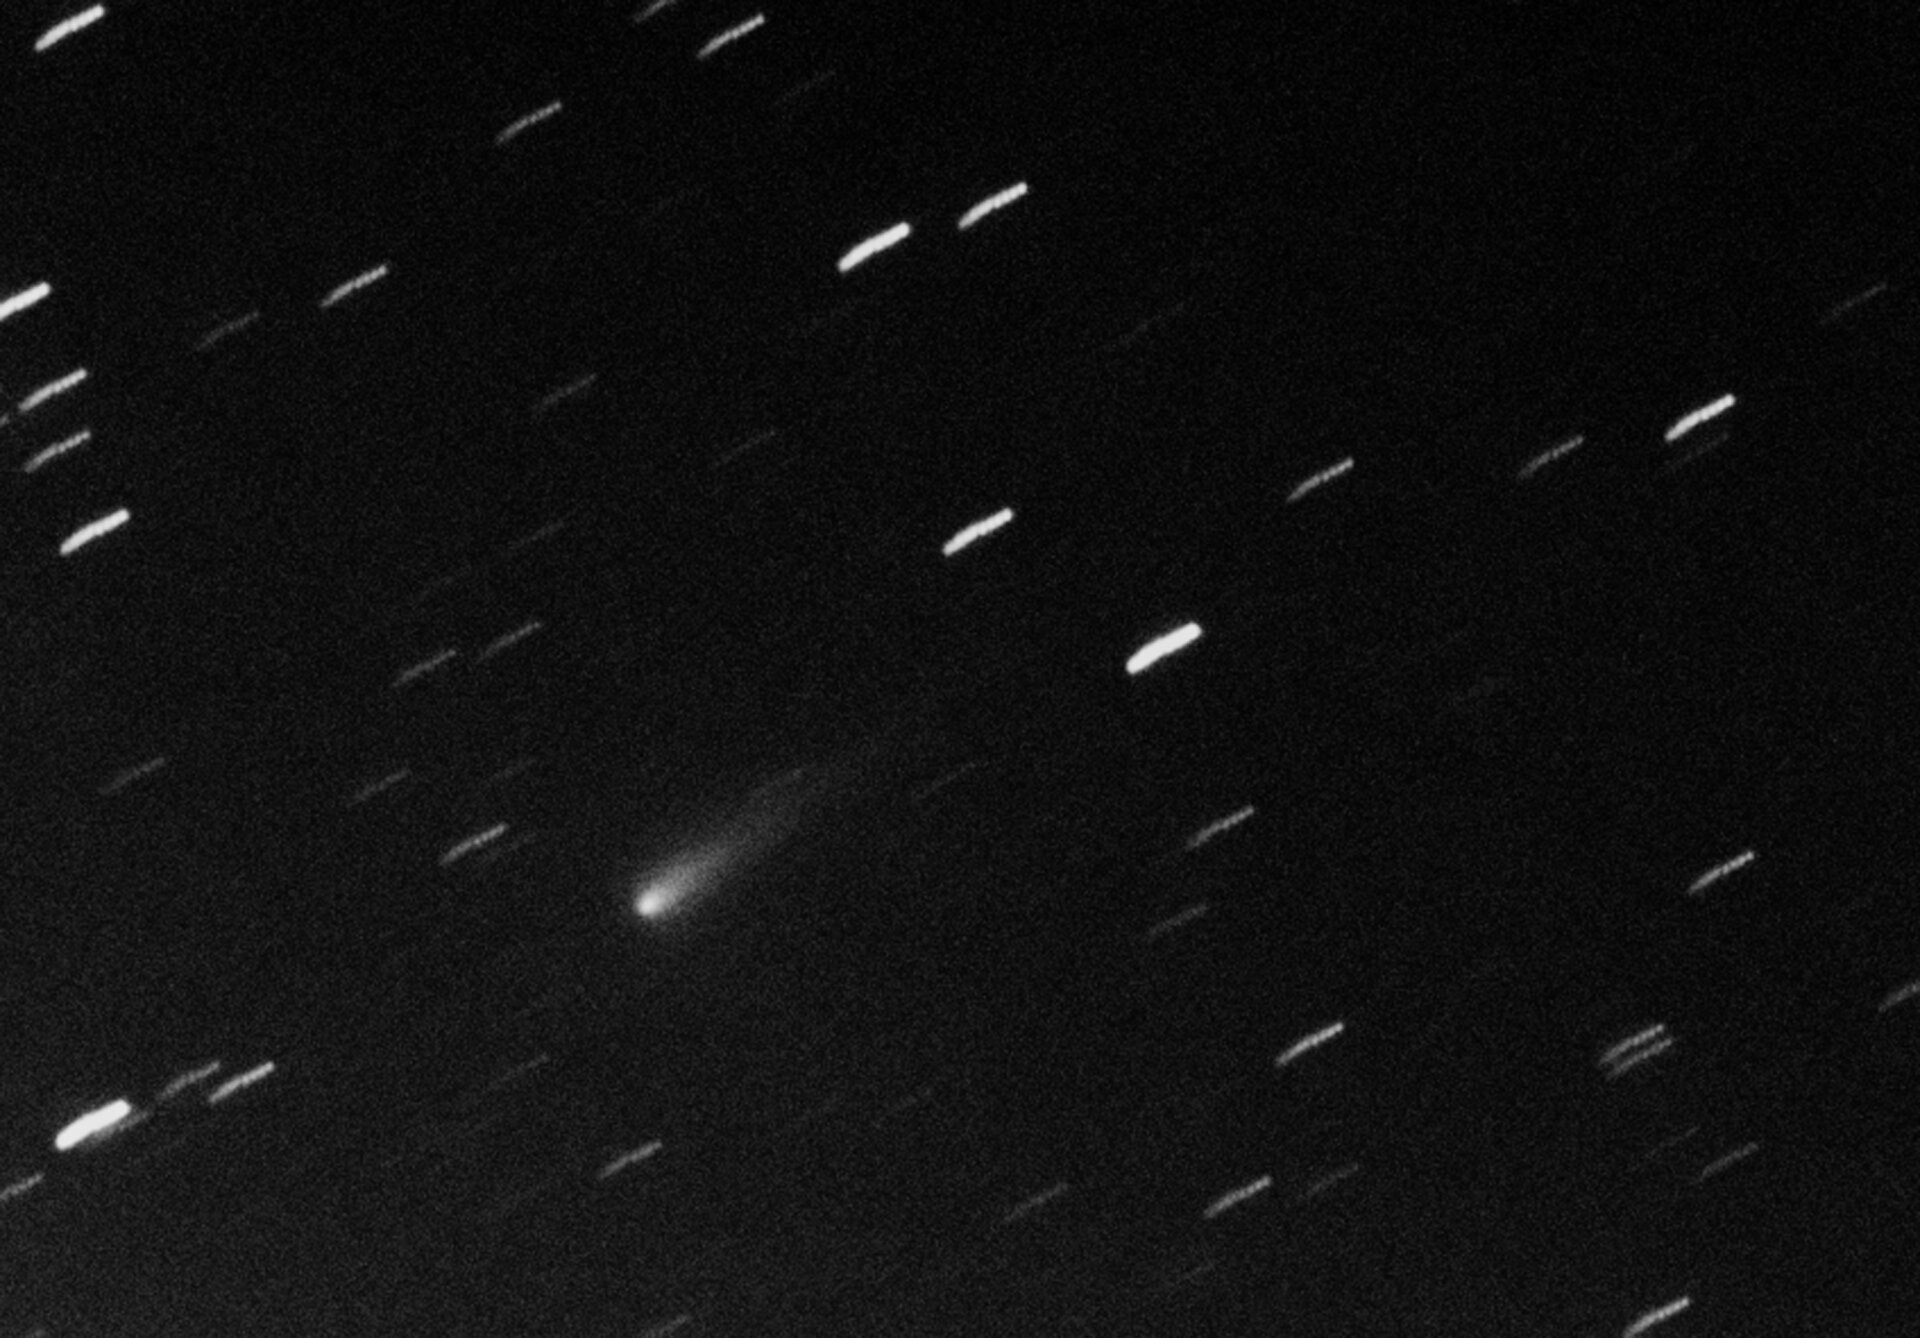 Comet ISON on 15 September